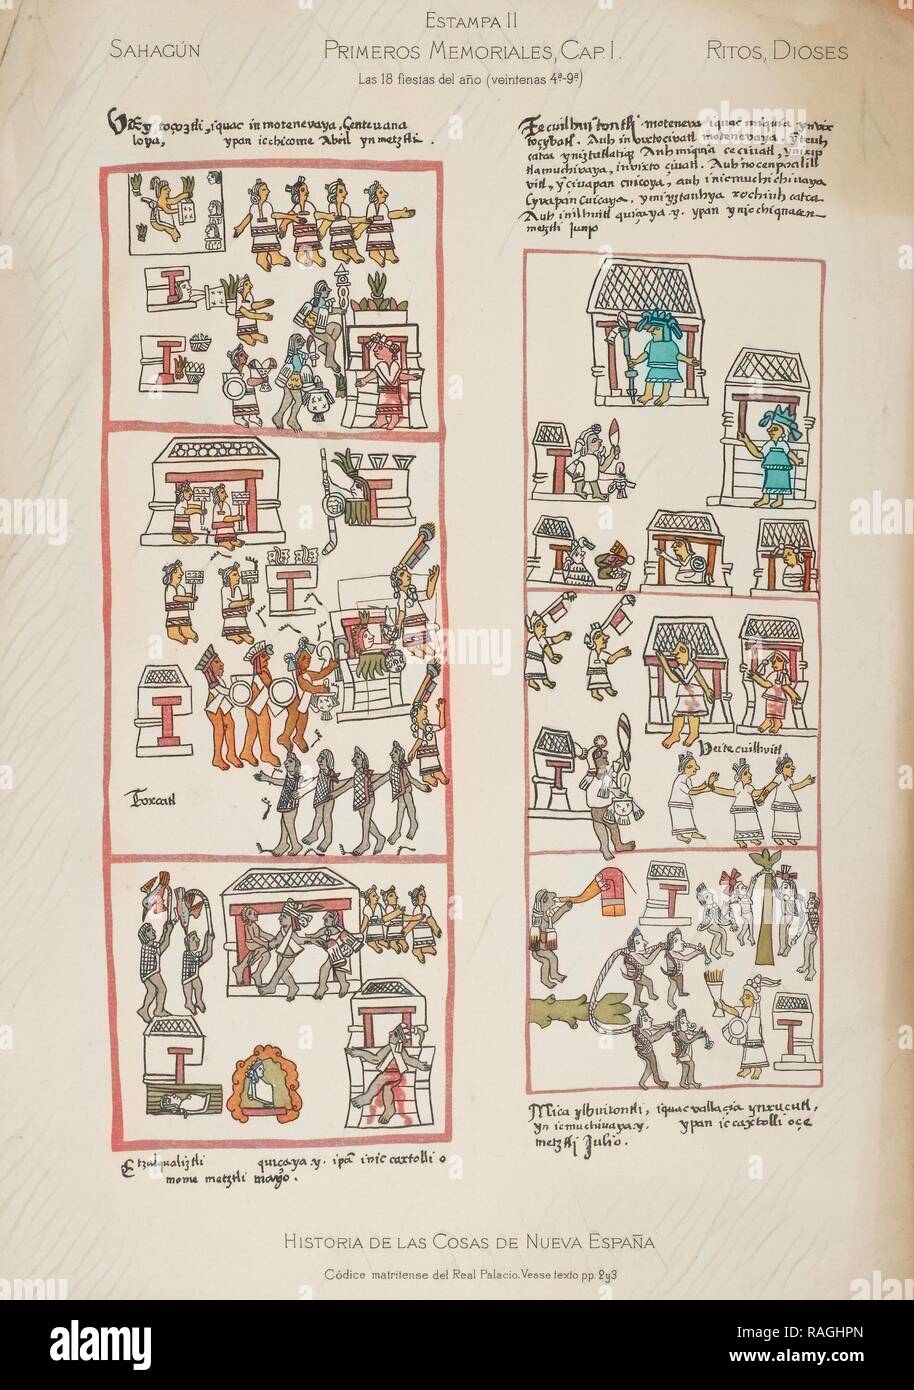 Historia de las cosas de Nueva Espana, Historia de las cosas de Nueva  España, Sahagún, Bernardino de, d. 1590 reimagined Stock Photo - Alamy